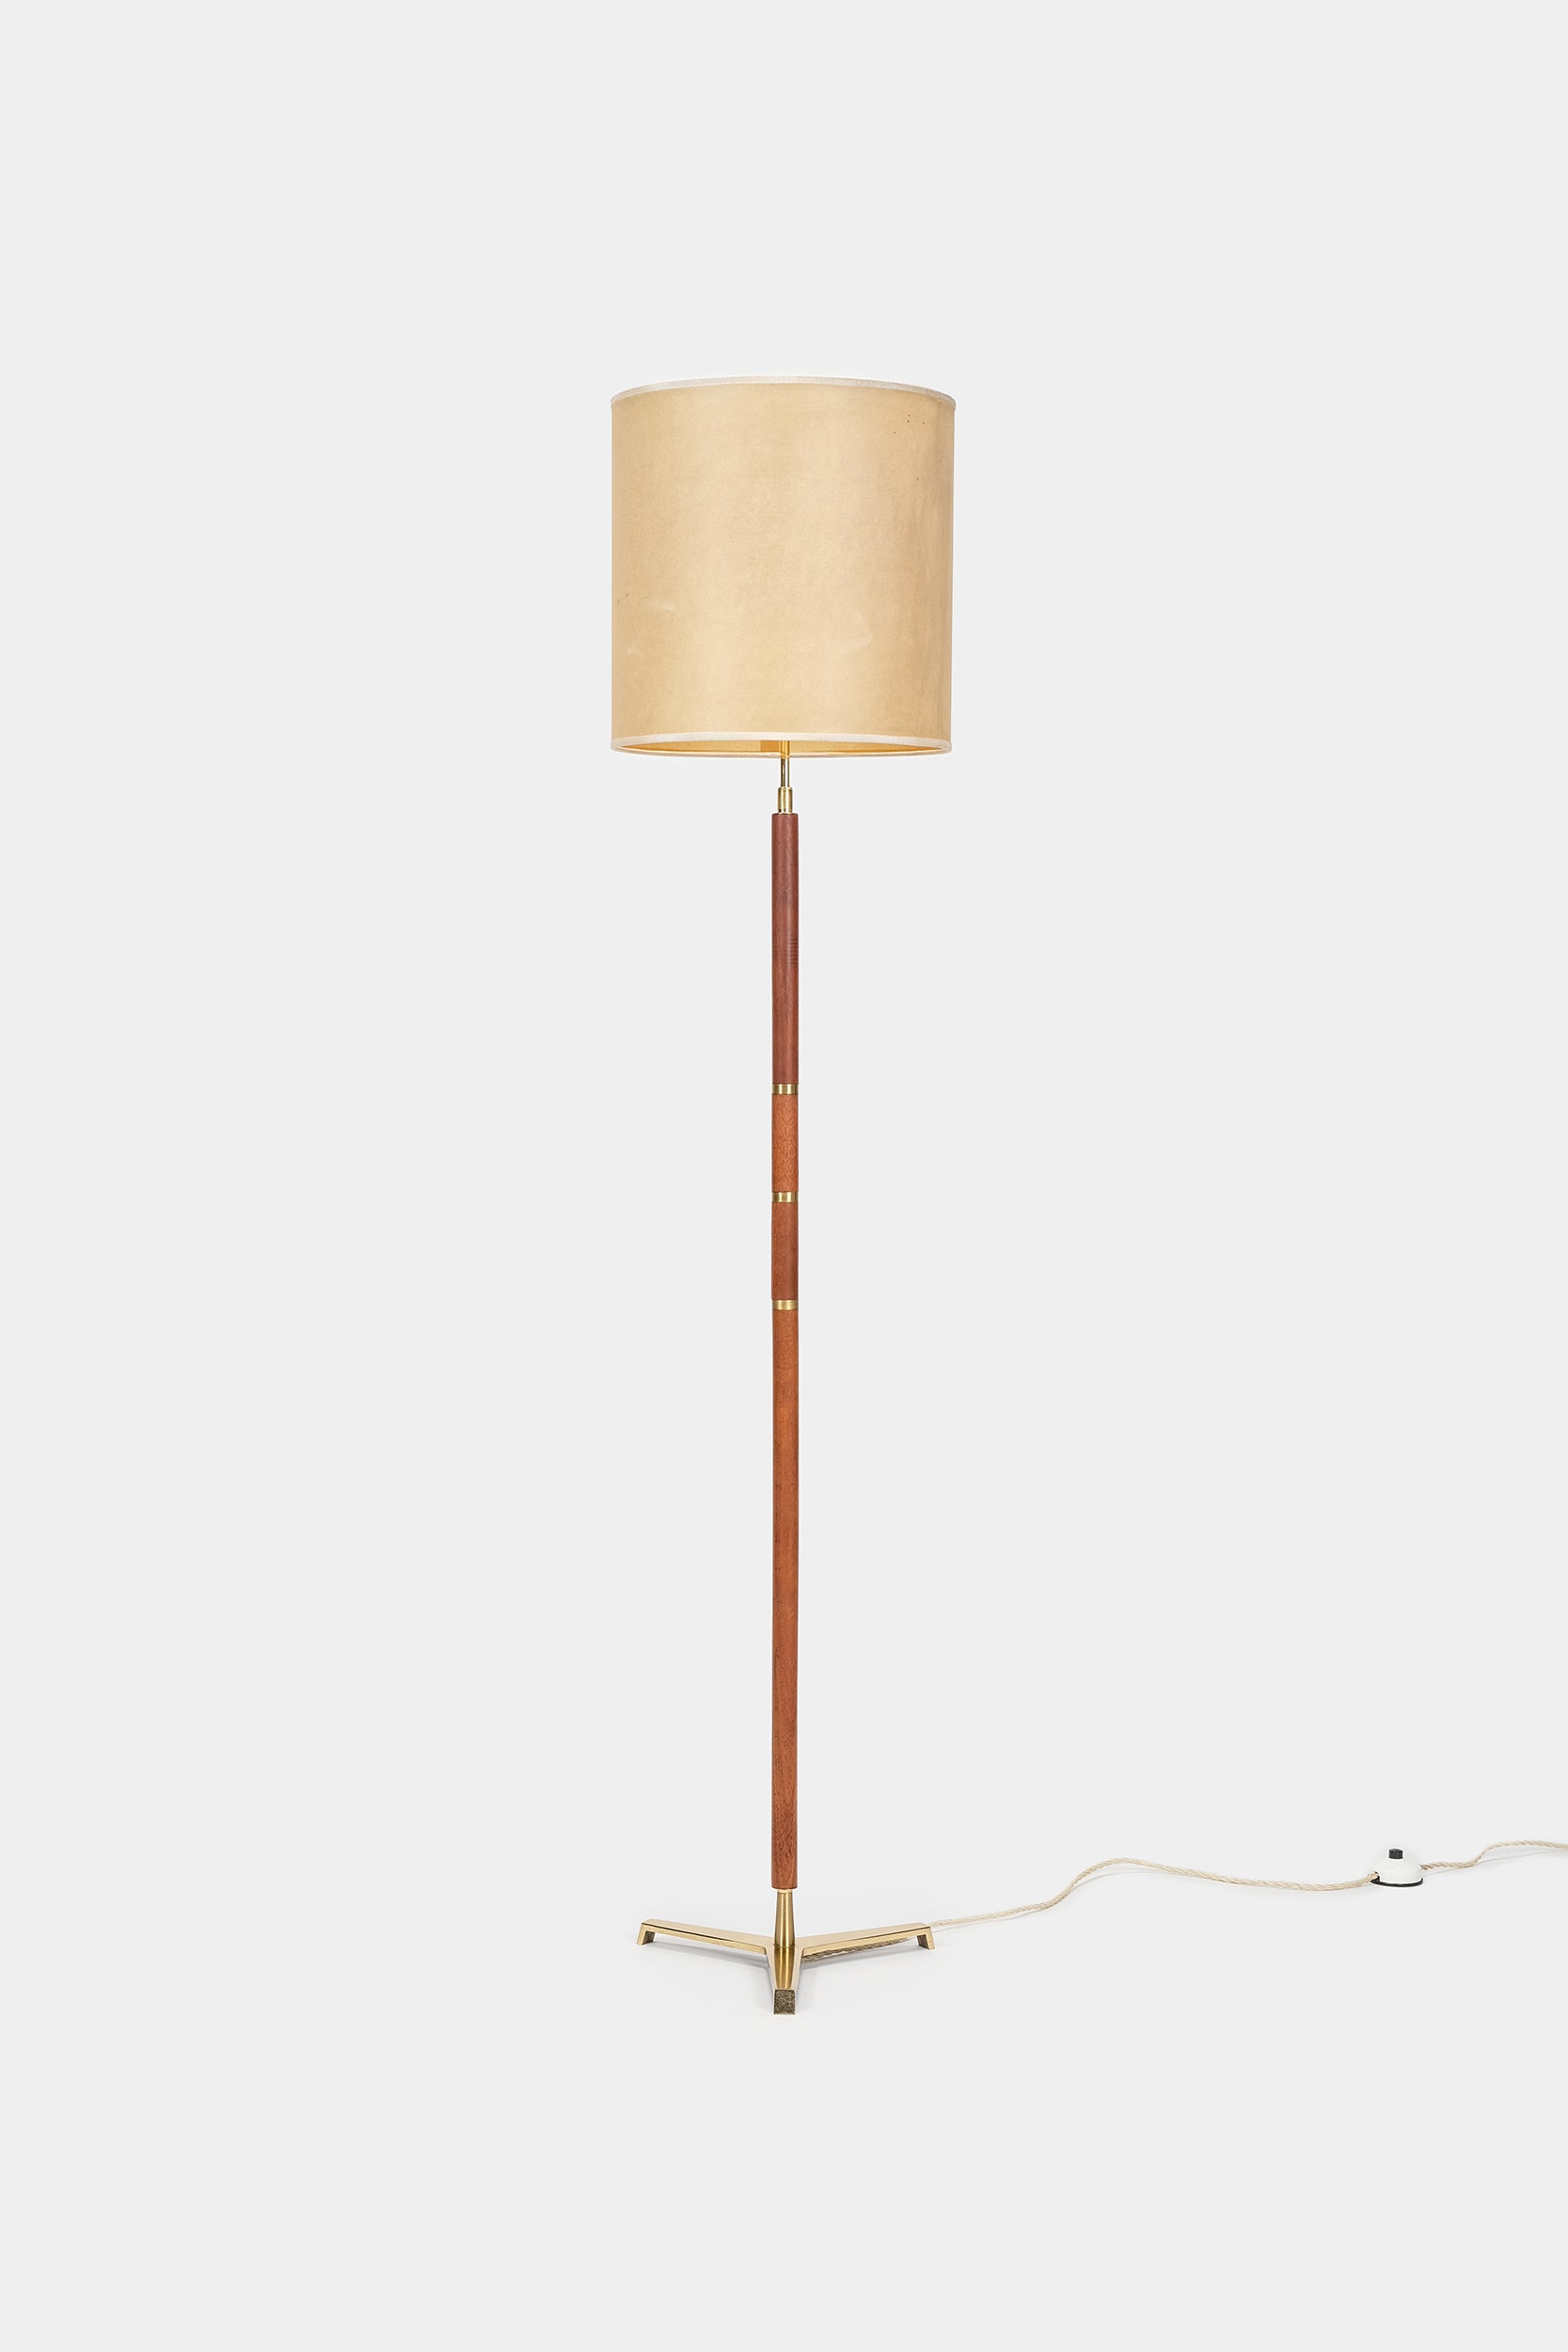 Floor Lamp, Teak and Brass, Switzerland, 60s